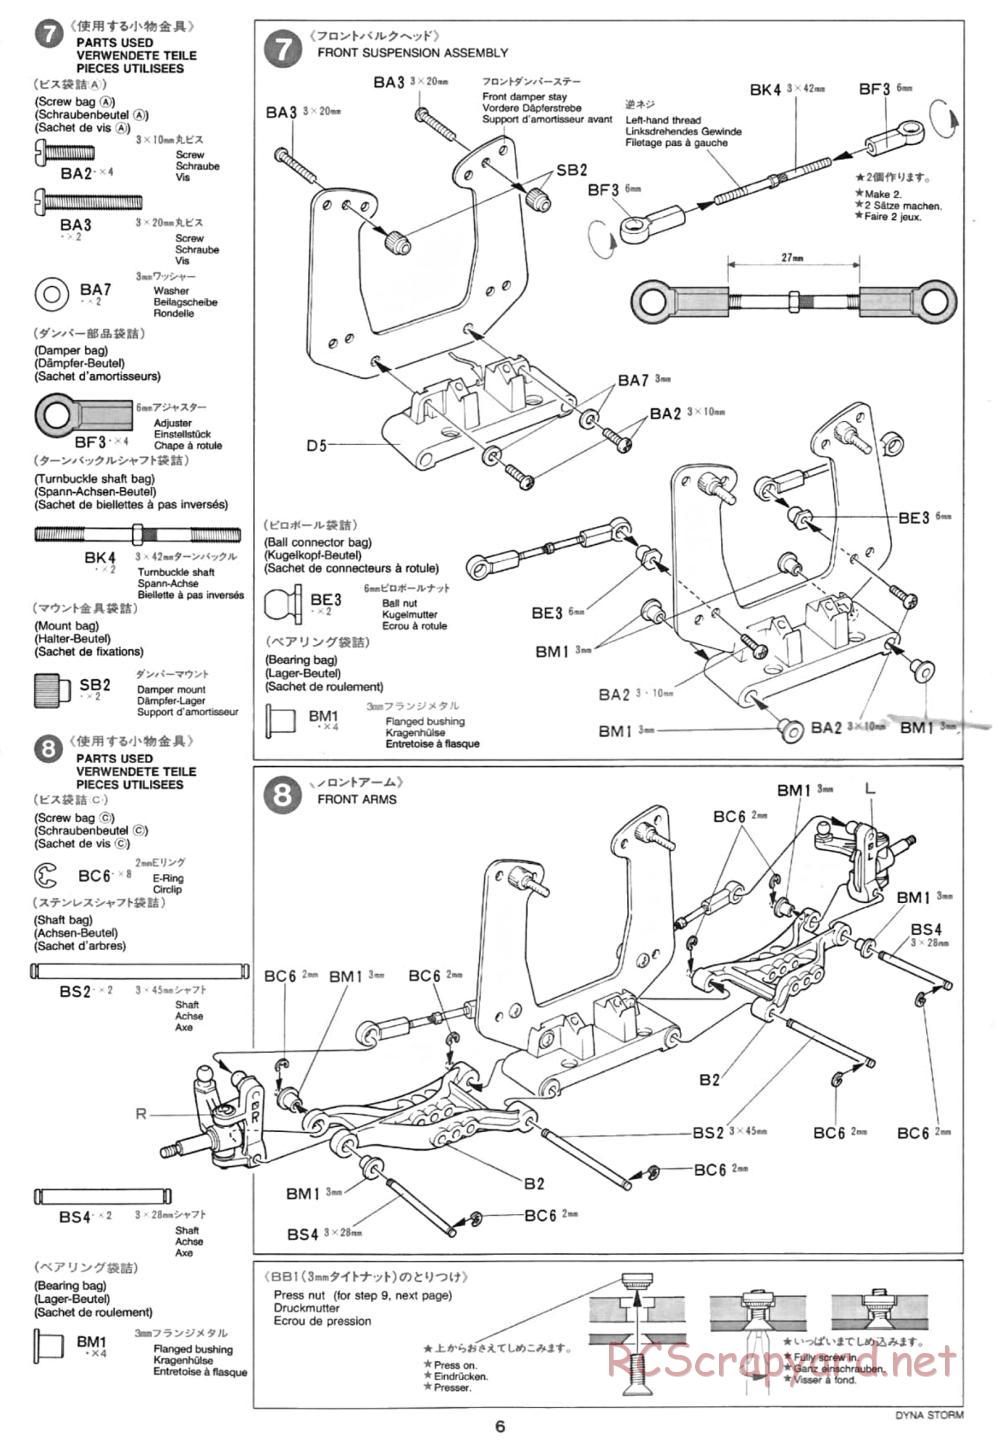 Tamiya - Dyna Storm Chassis - Manual - Page 6